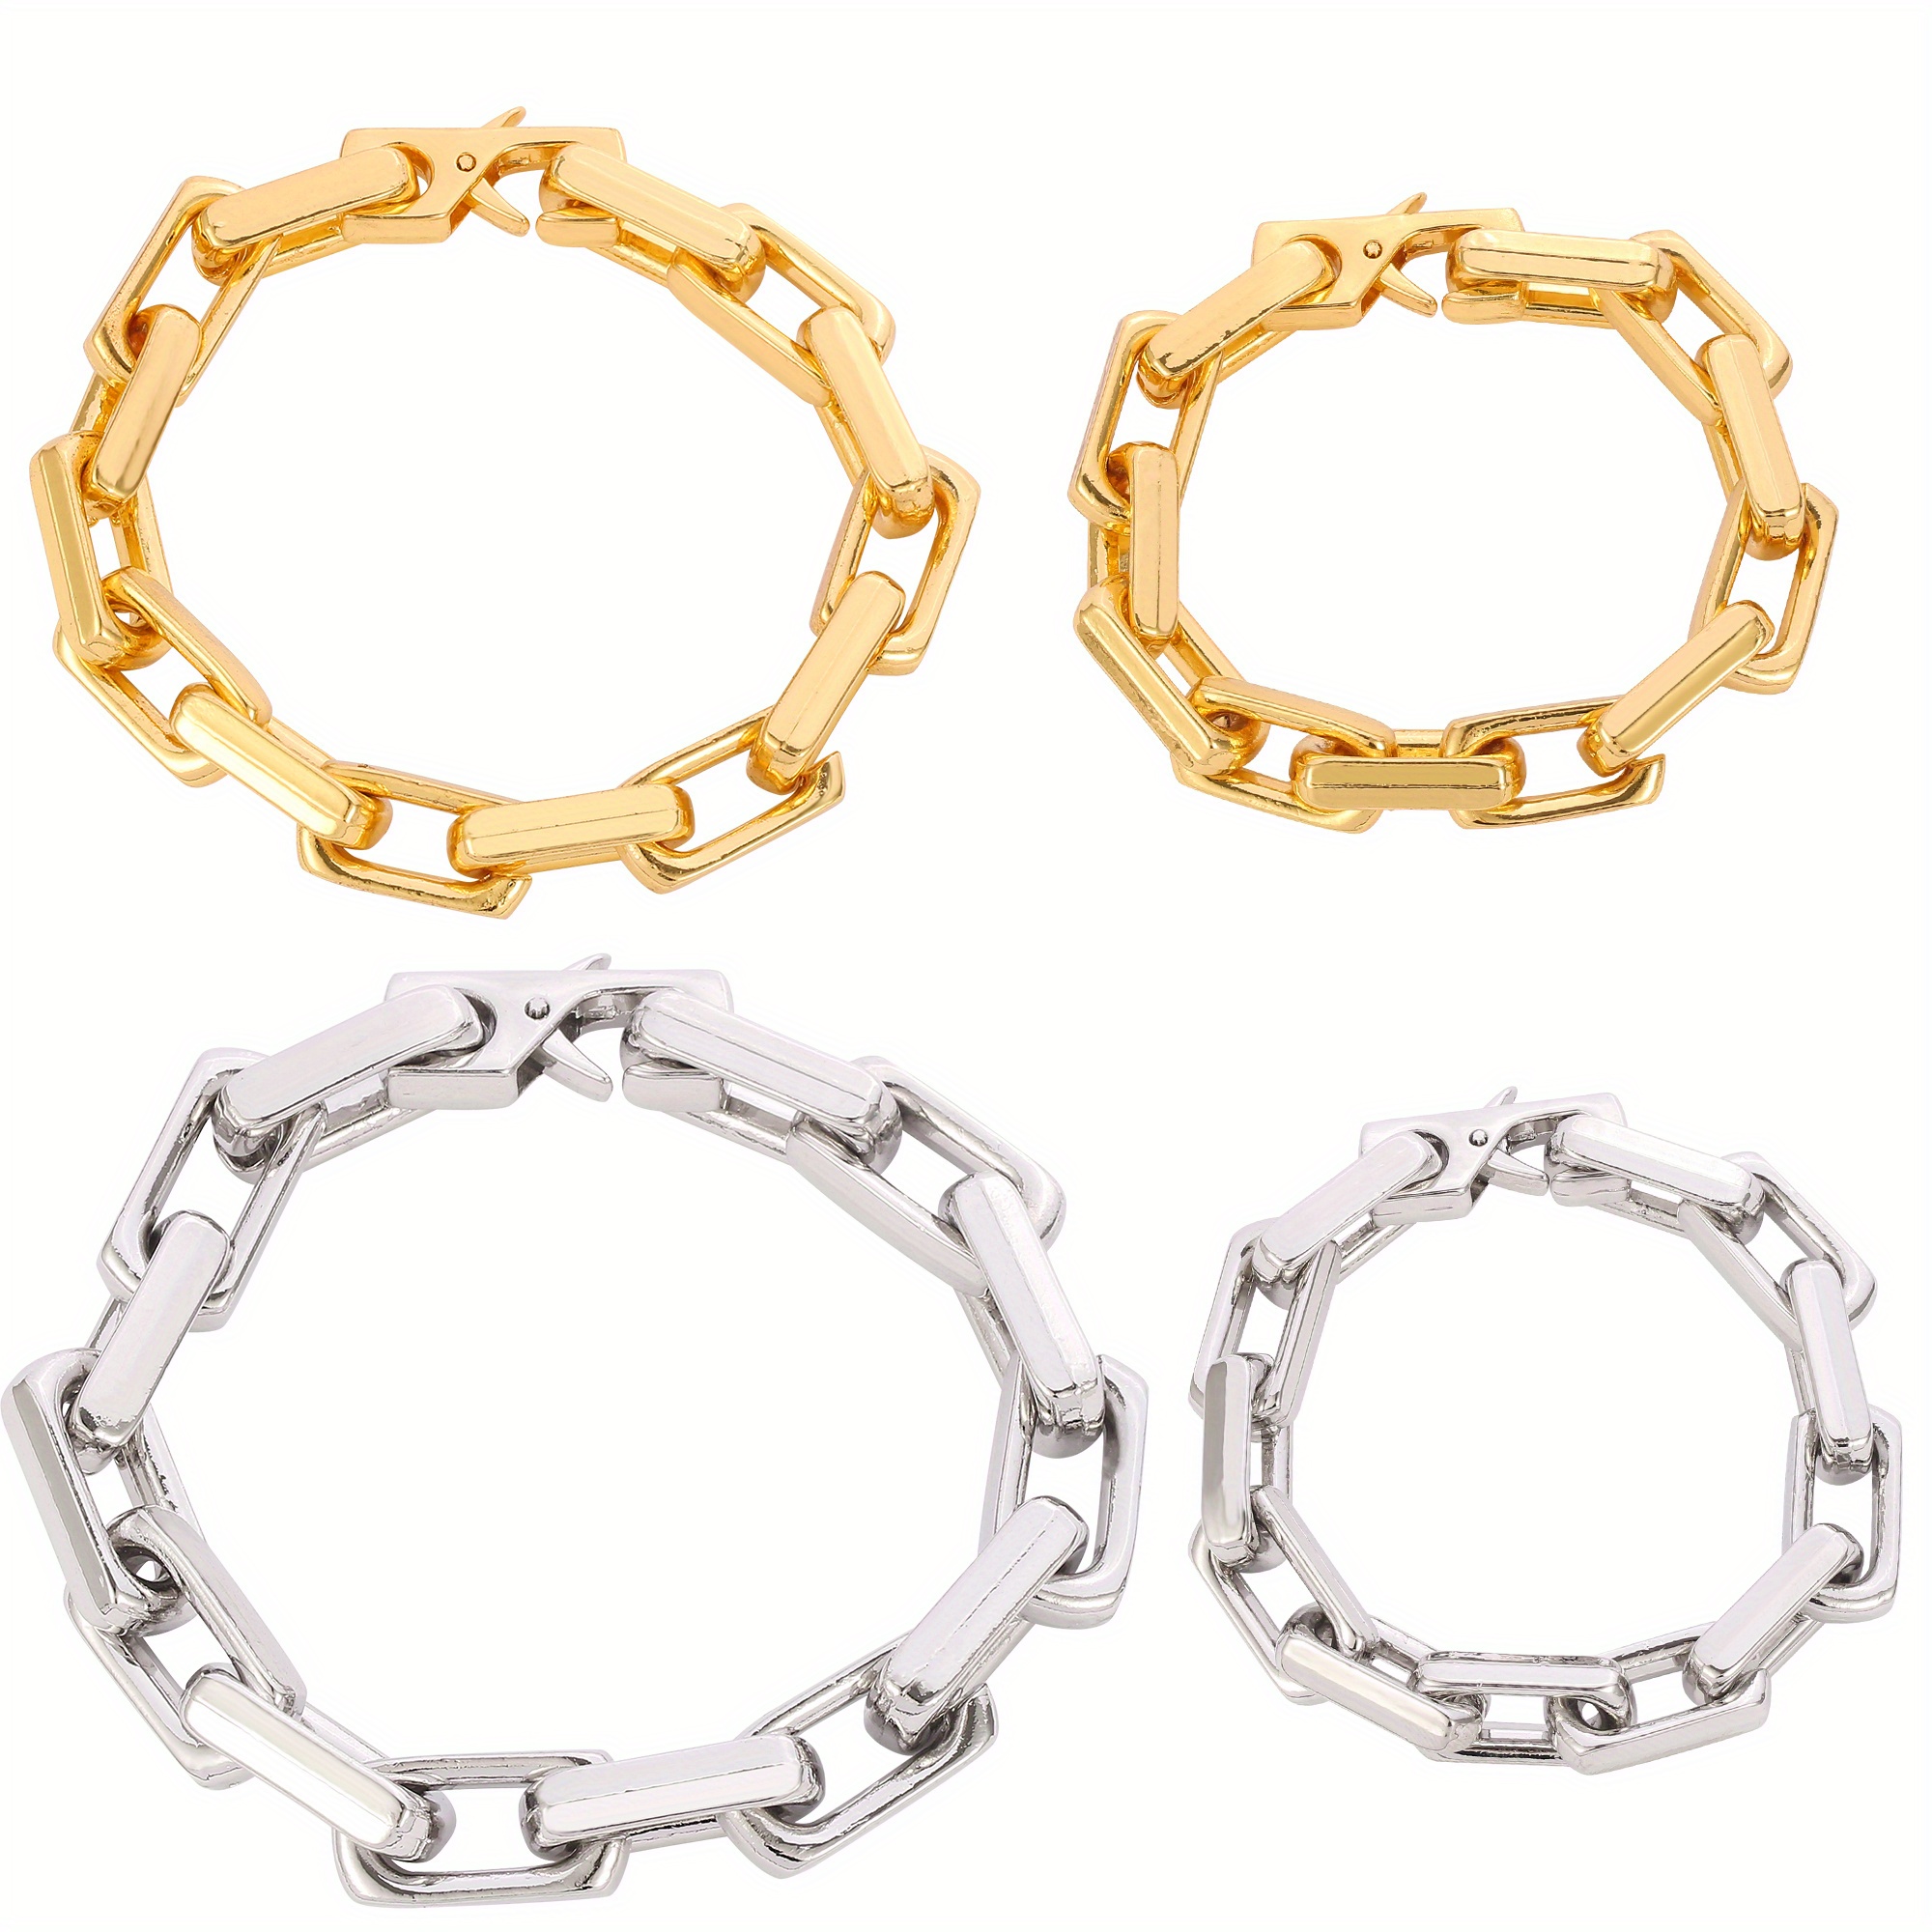 Louis Vuitton, Jewelry, Louis Vuitton Louis Vuitton Monogram Chain  Bracelet M64224 Silver Metal